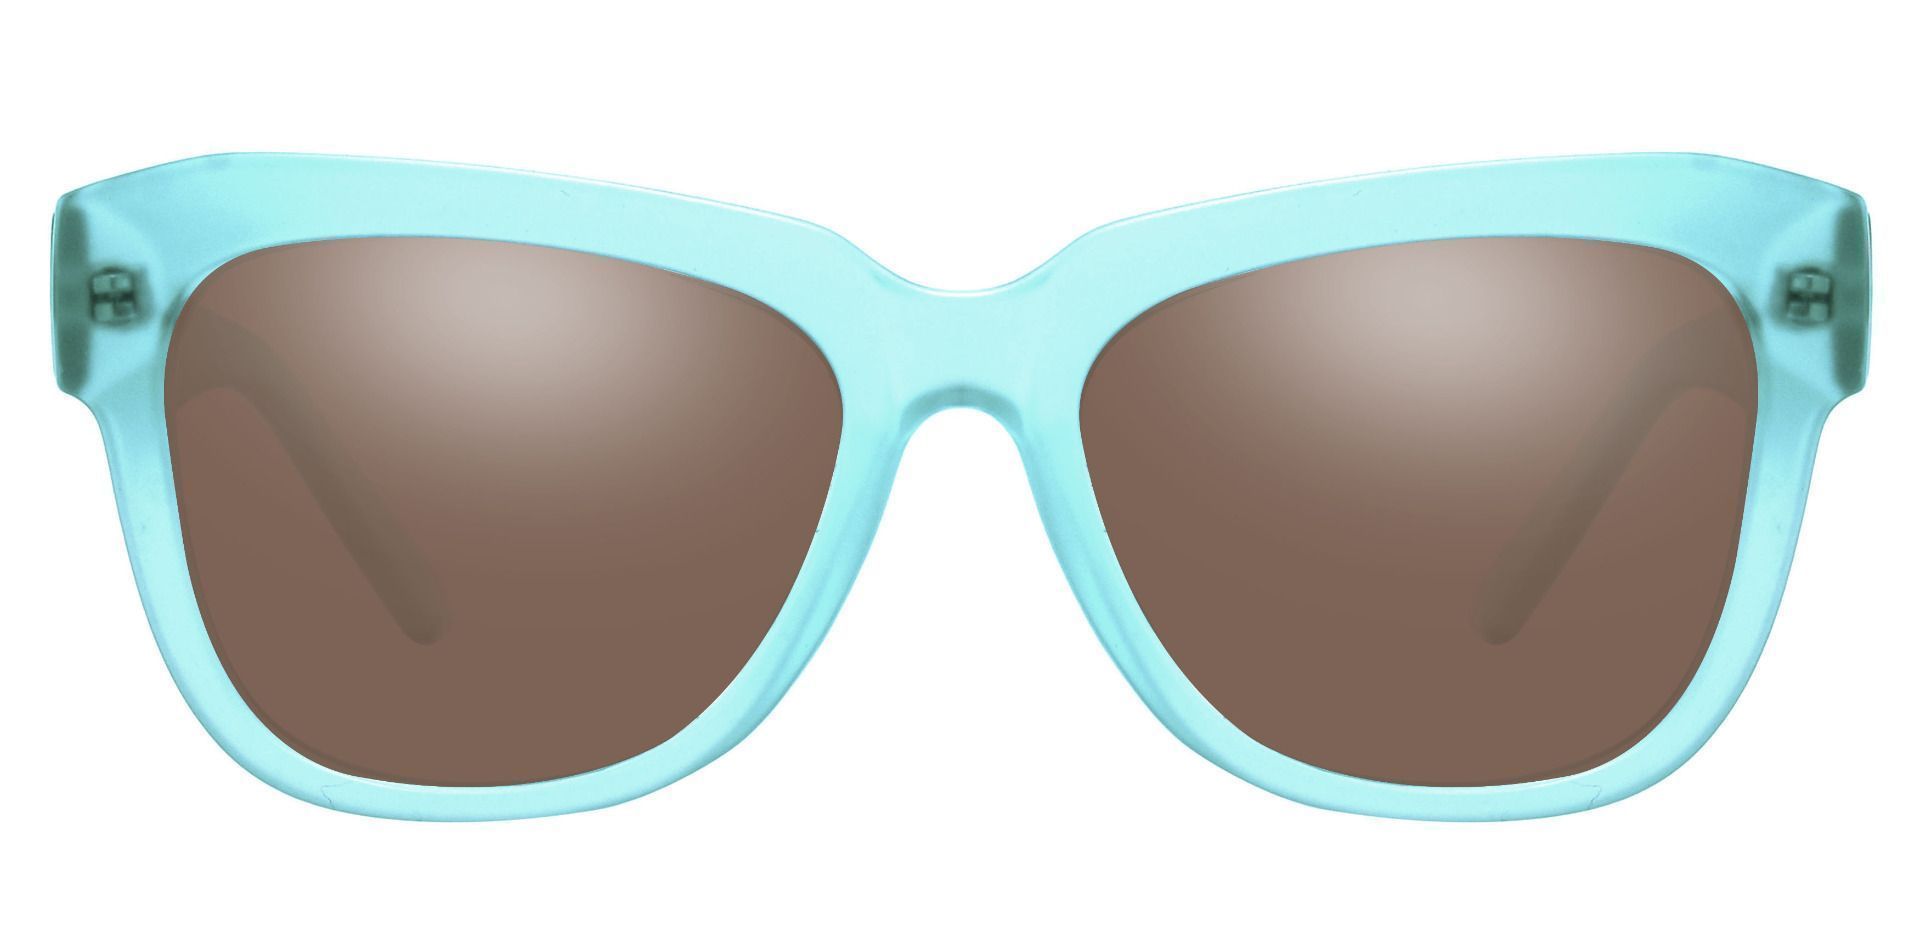 Gina Cat-Eye Progressive Sunglasses - Blue Frame With Brown Lenses